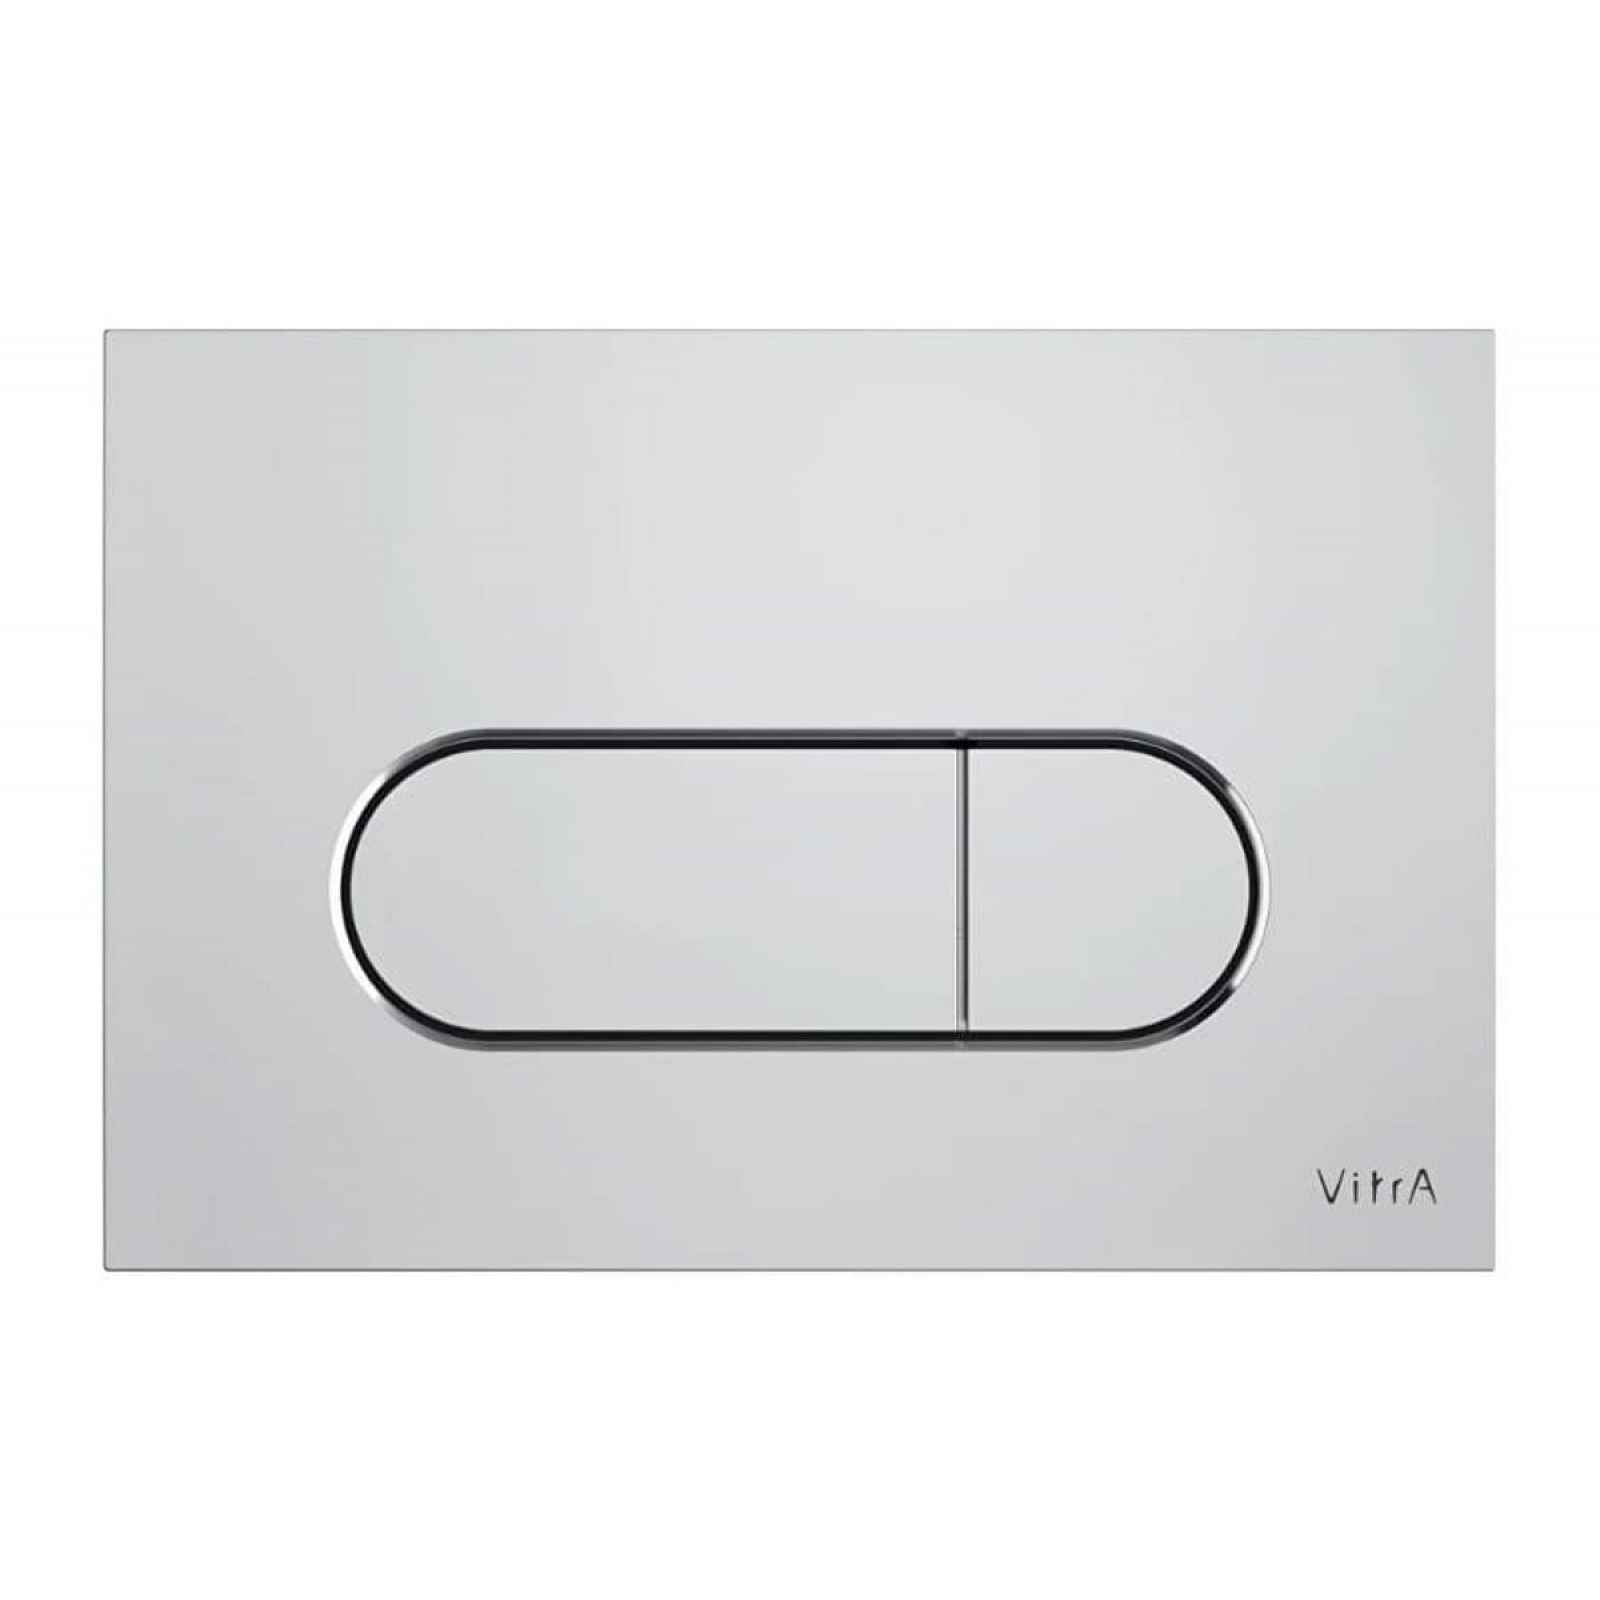 Ovládací tlačítko VitrA Root Round plast chrom lesklý 740-2280